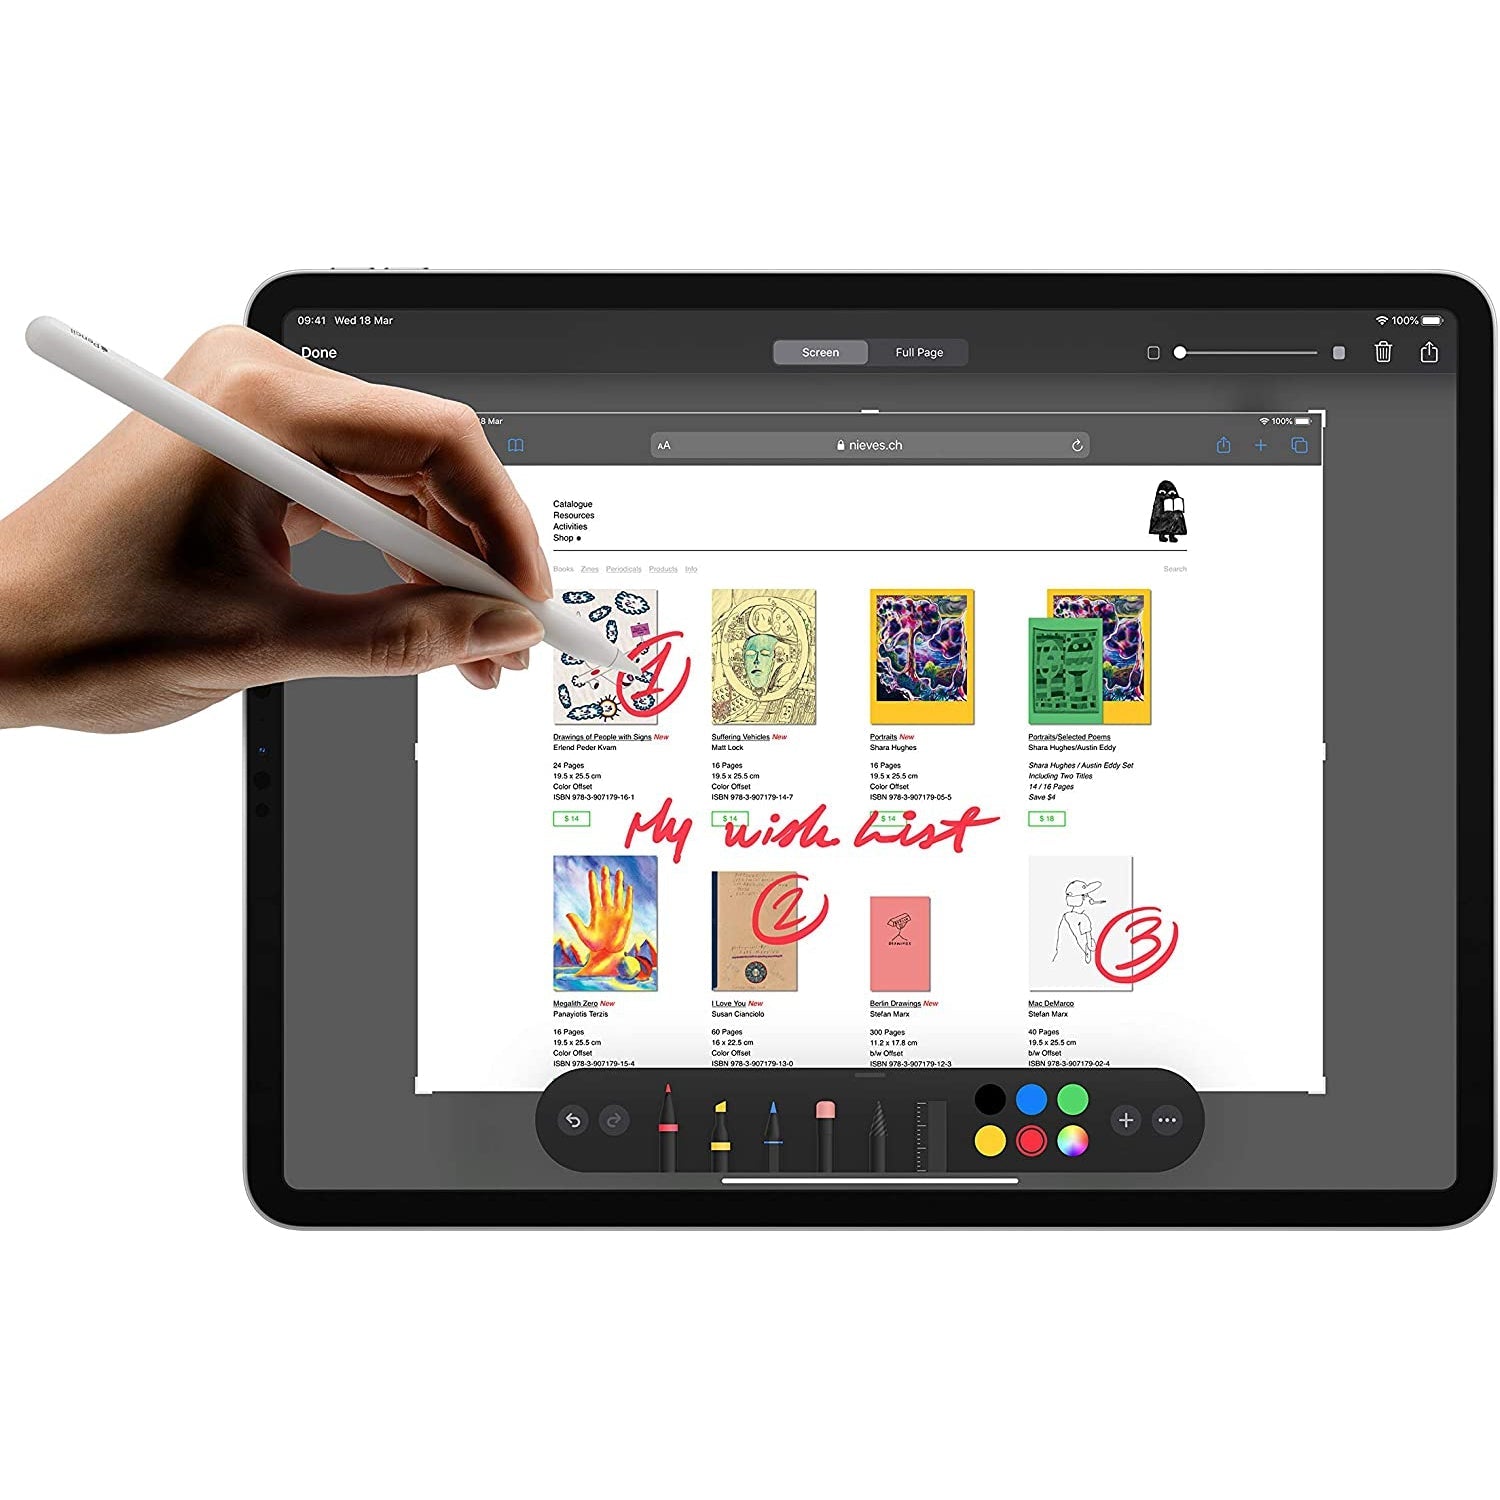 2020 Apple iPad Pro 11-inch, Wi-Fi, 128GB - Silver (2nd Generation)